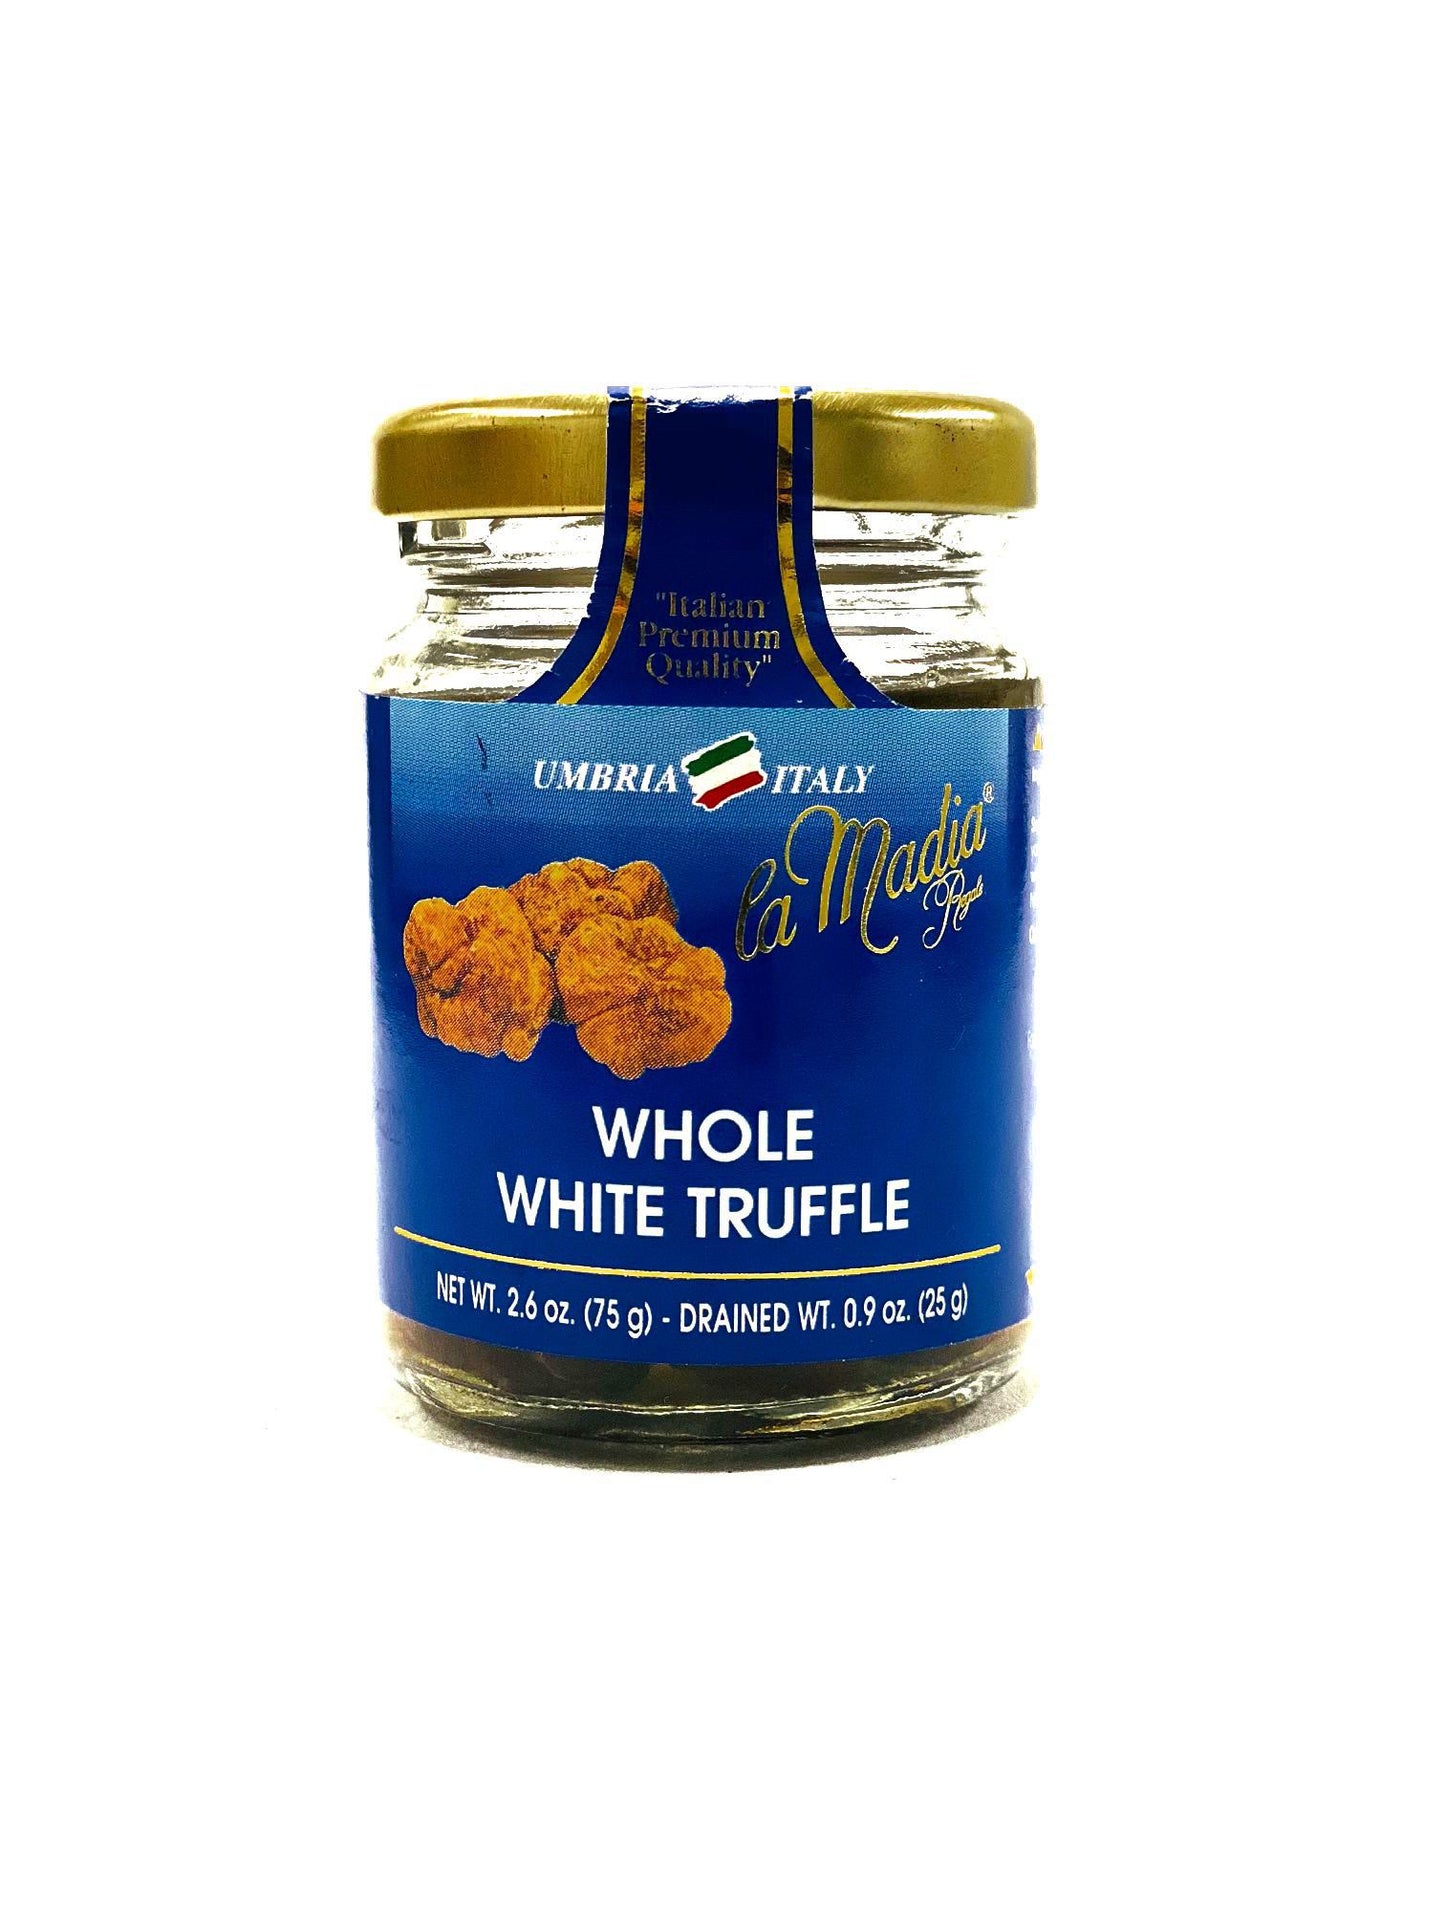 La Madia Regale Whole White Truffle, 2.6 oz